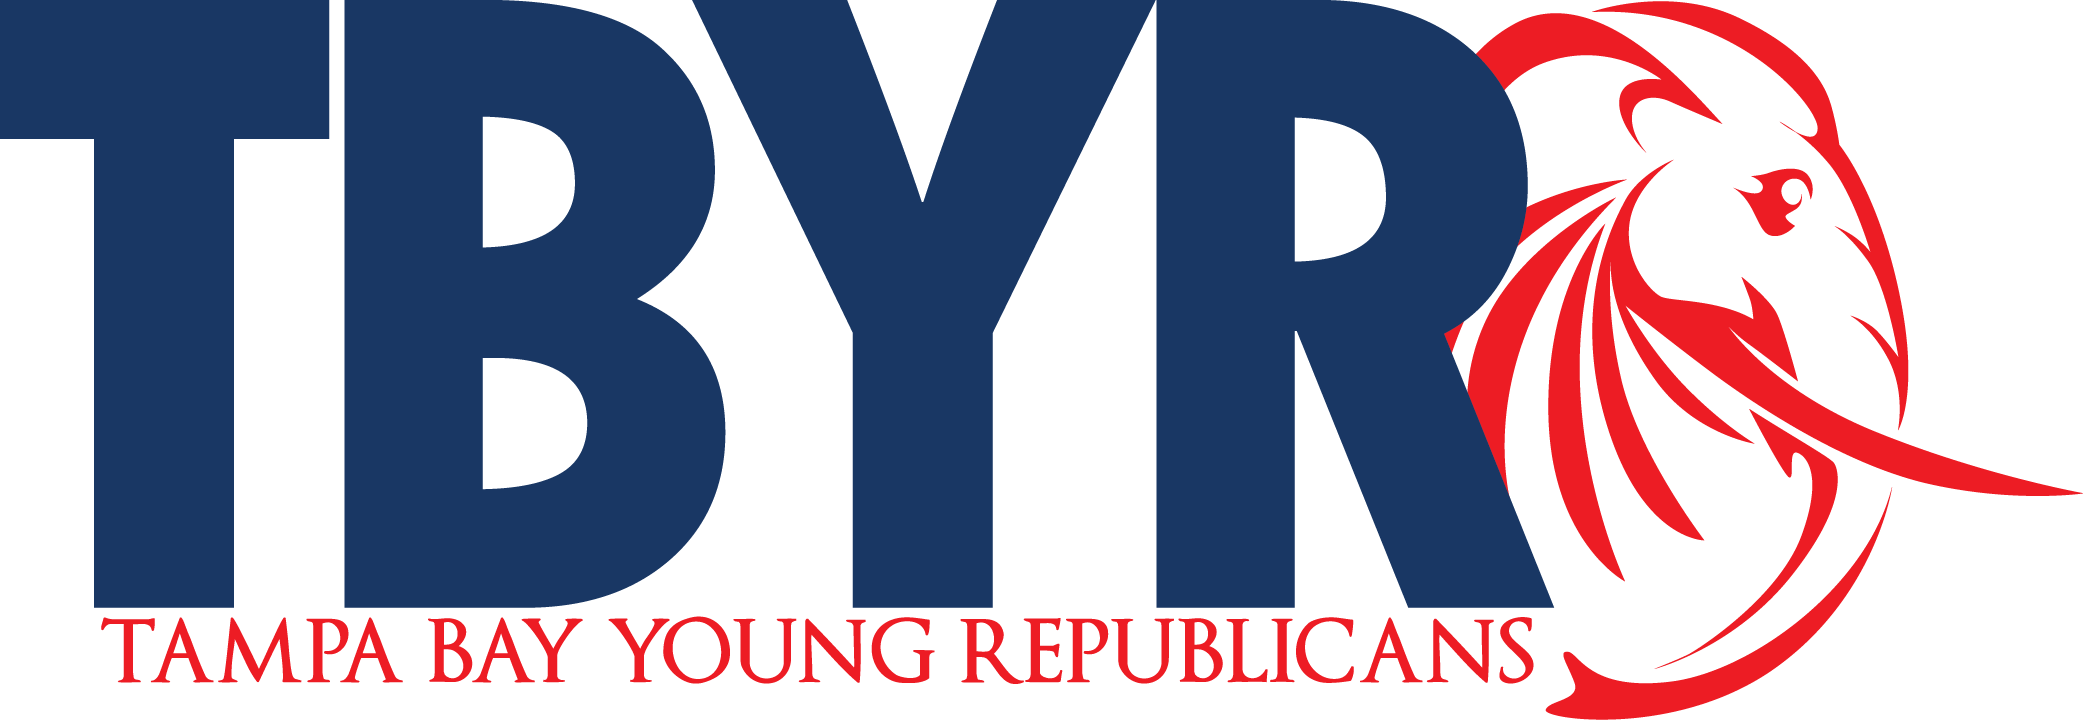 tampa bay young republican logo elephant